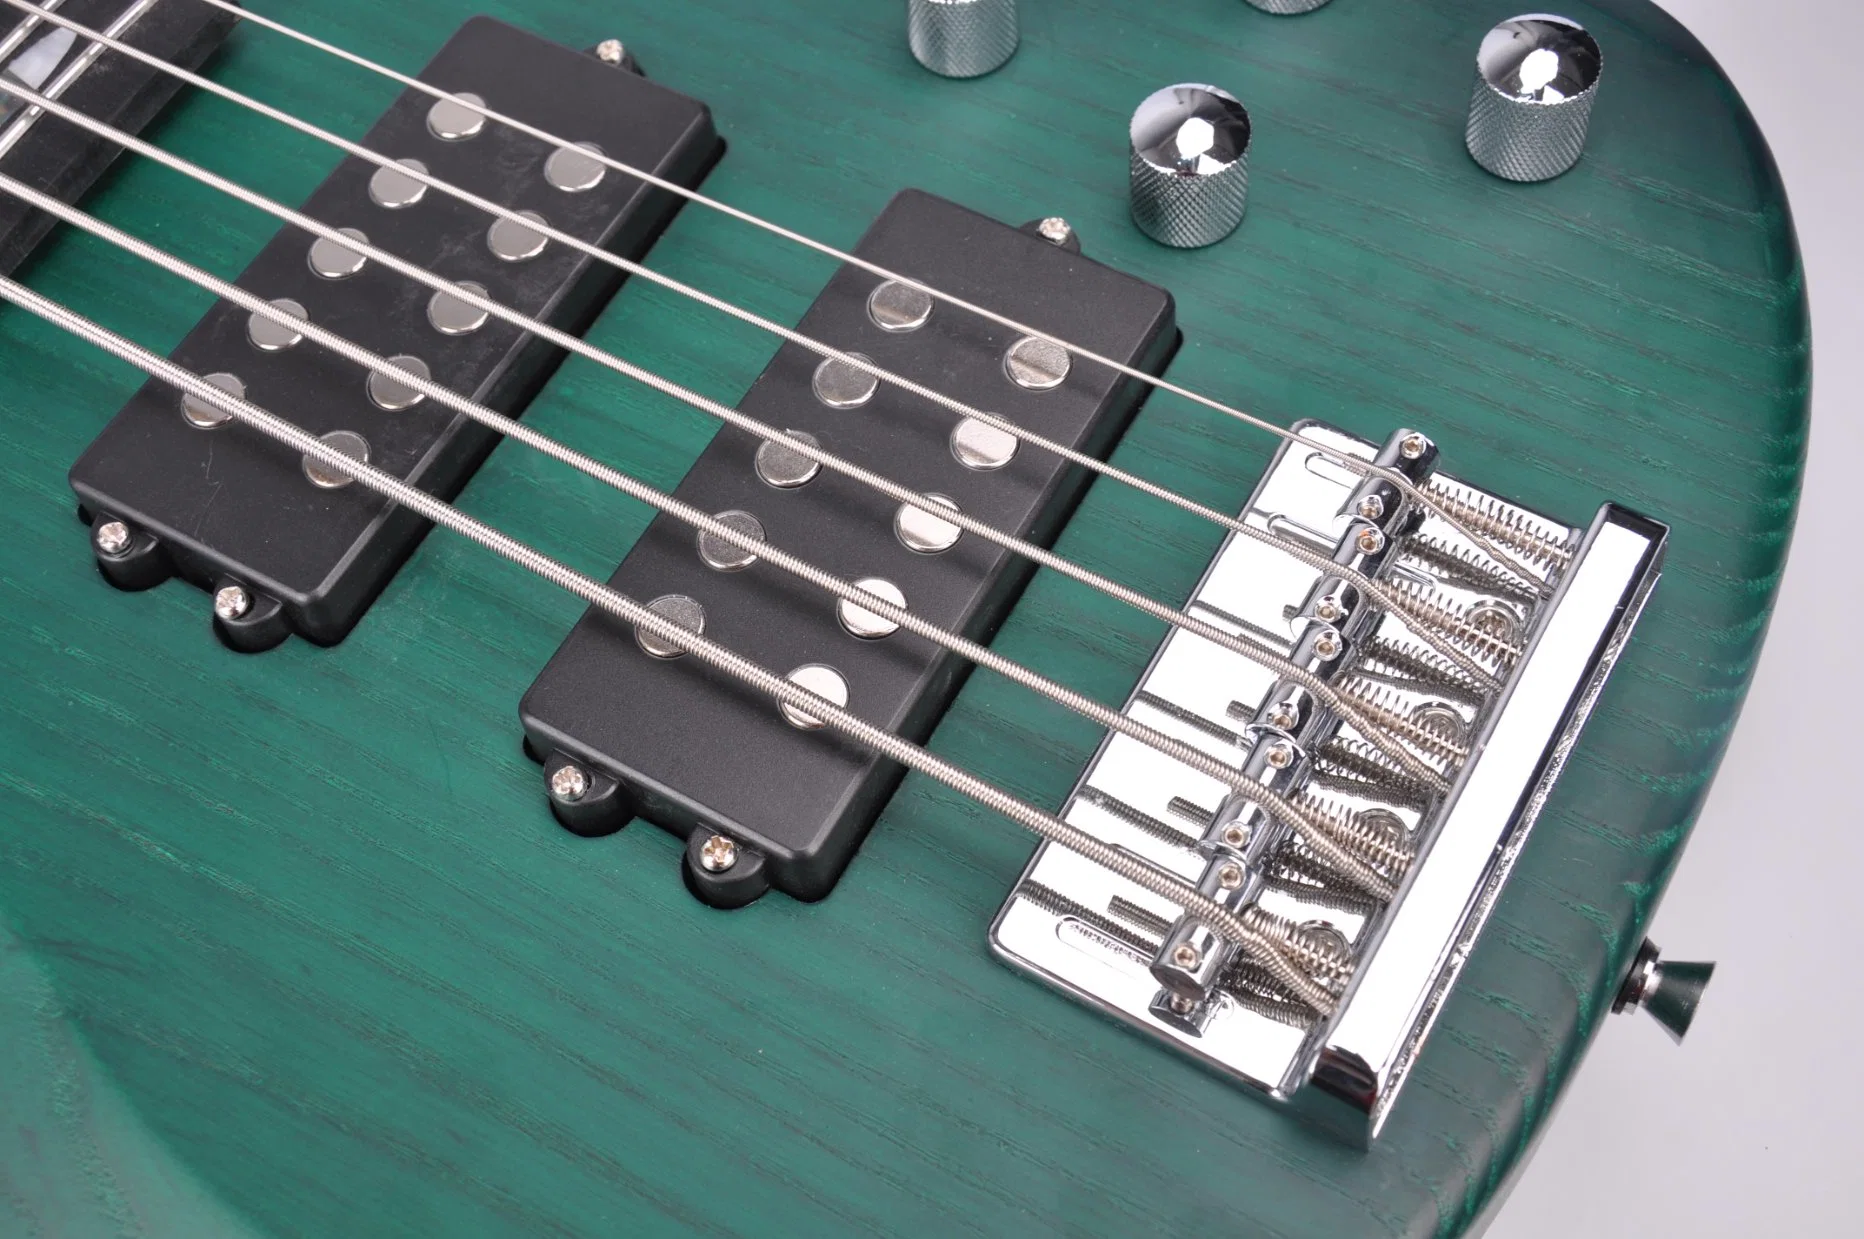 Custom 5 String Corpo Cinzas Electric Bass Guitar Kit (EBS715)